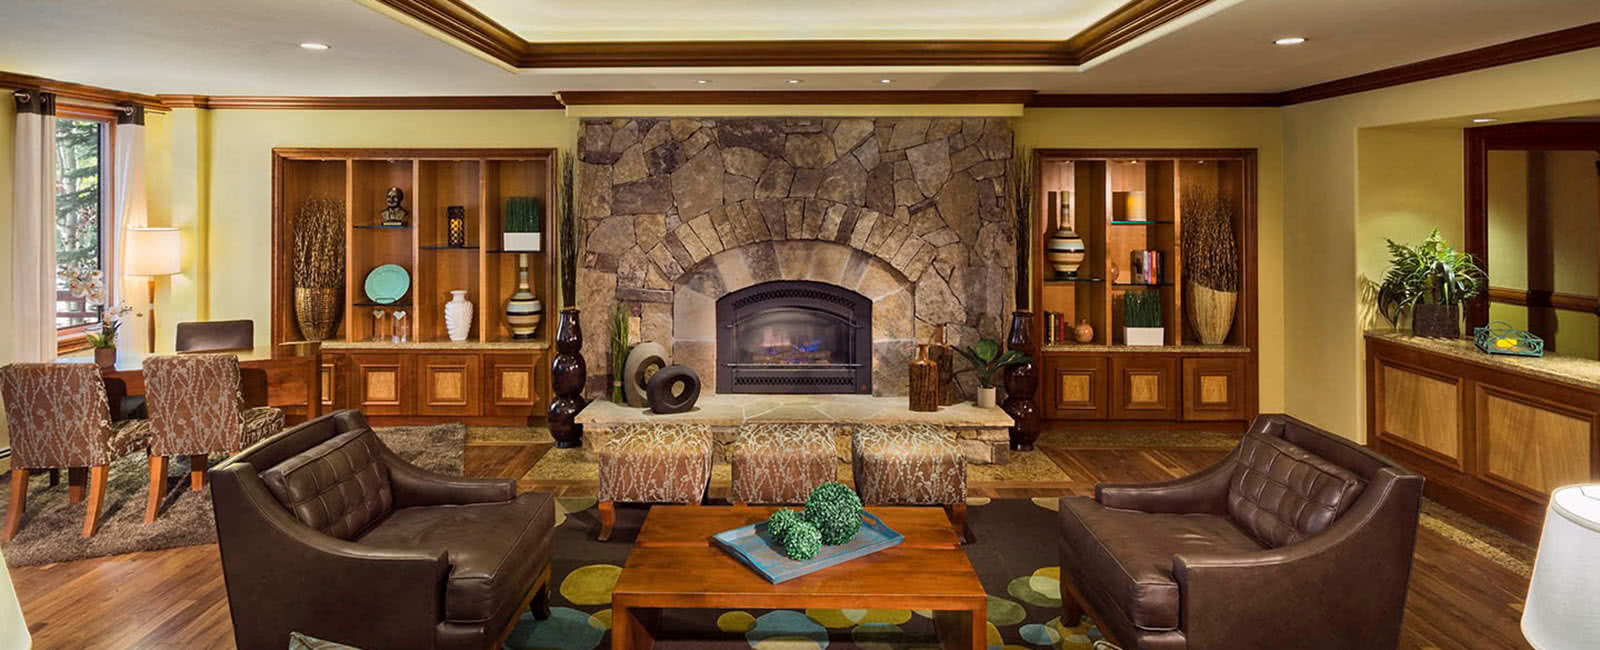 Lobby at Valdoro Mountain Lodge in Breckenridge, Colorado